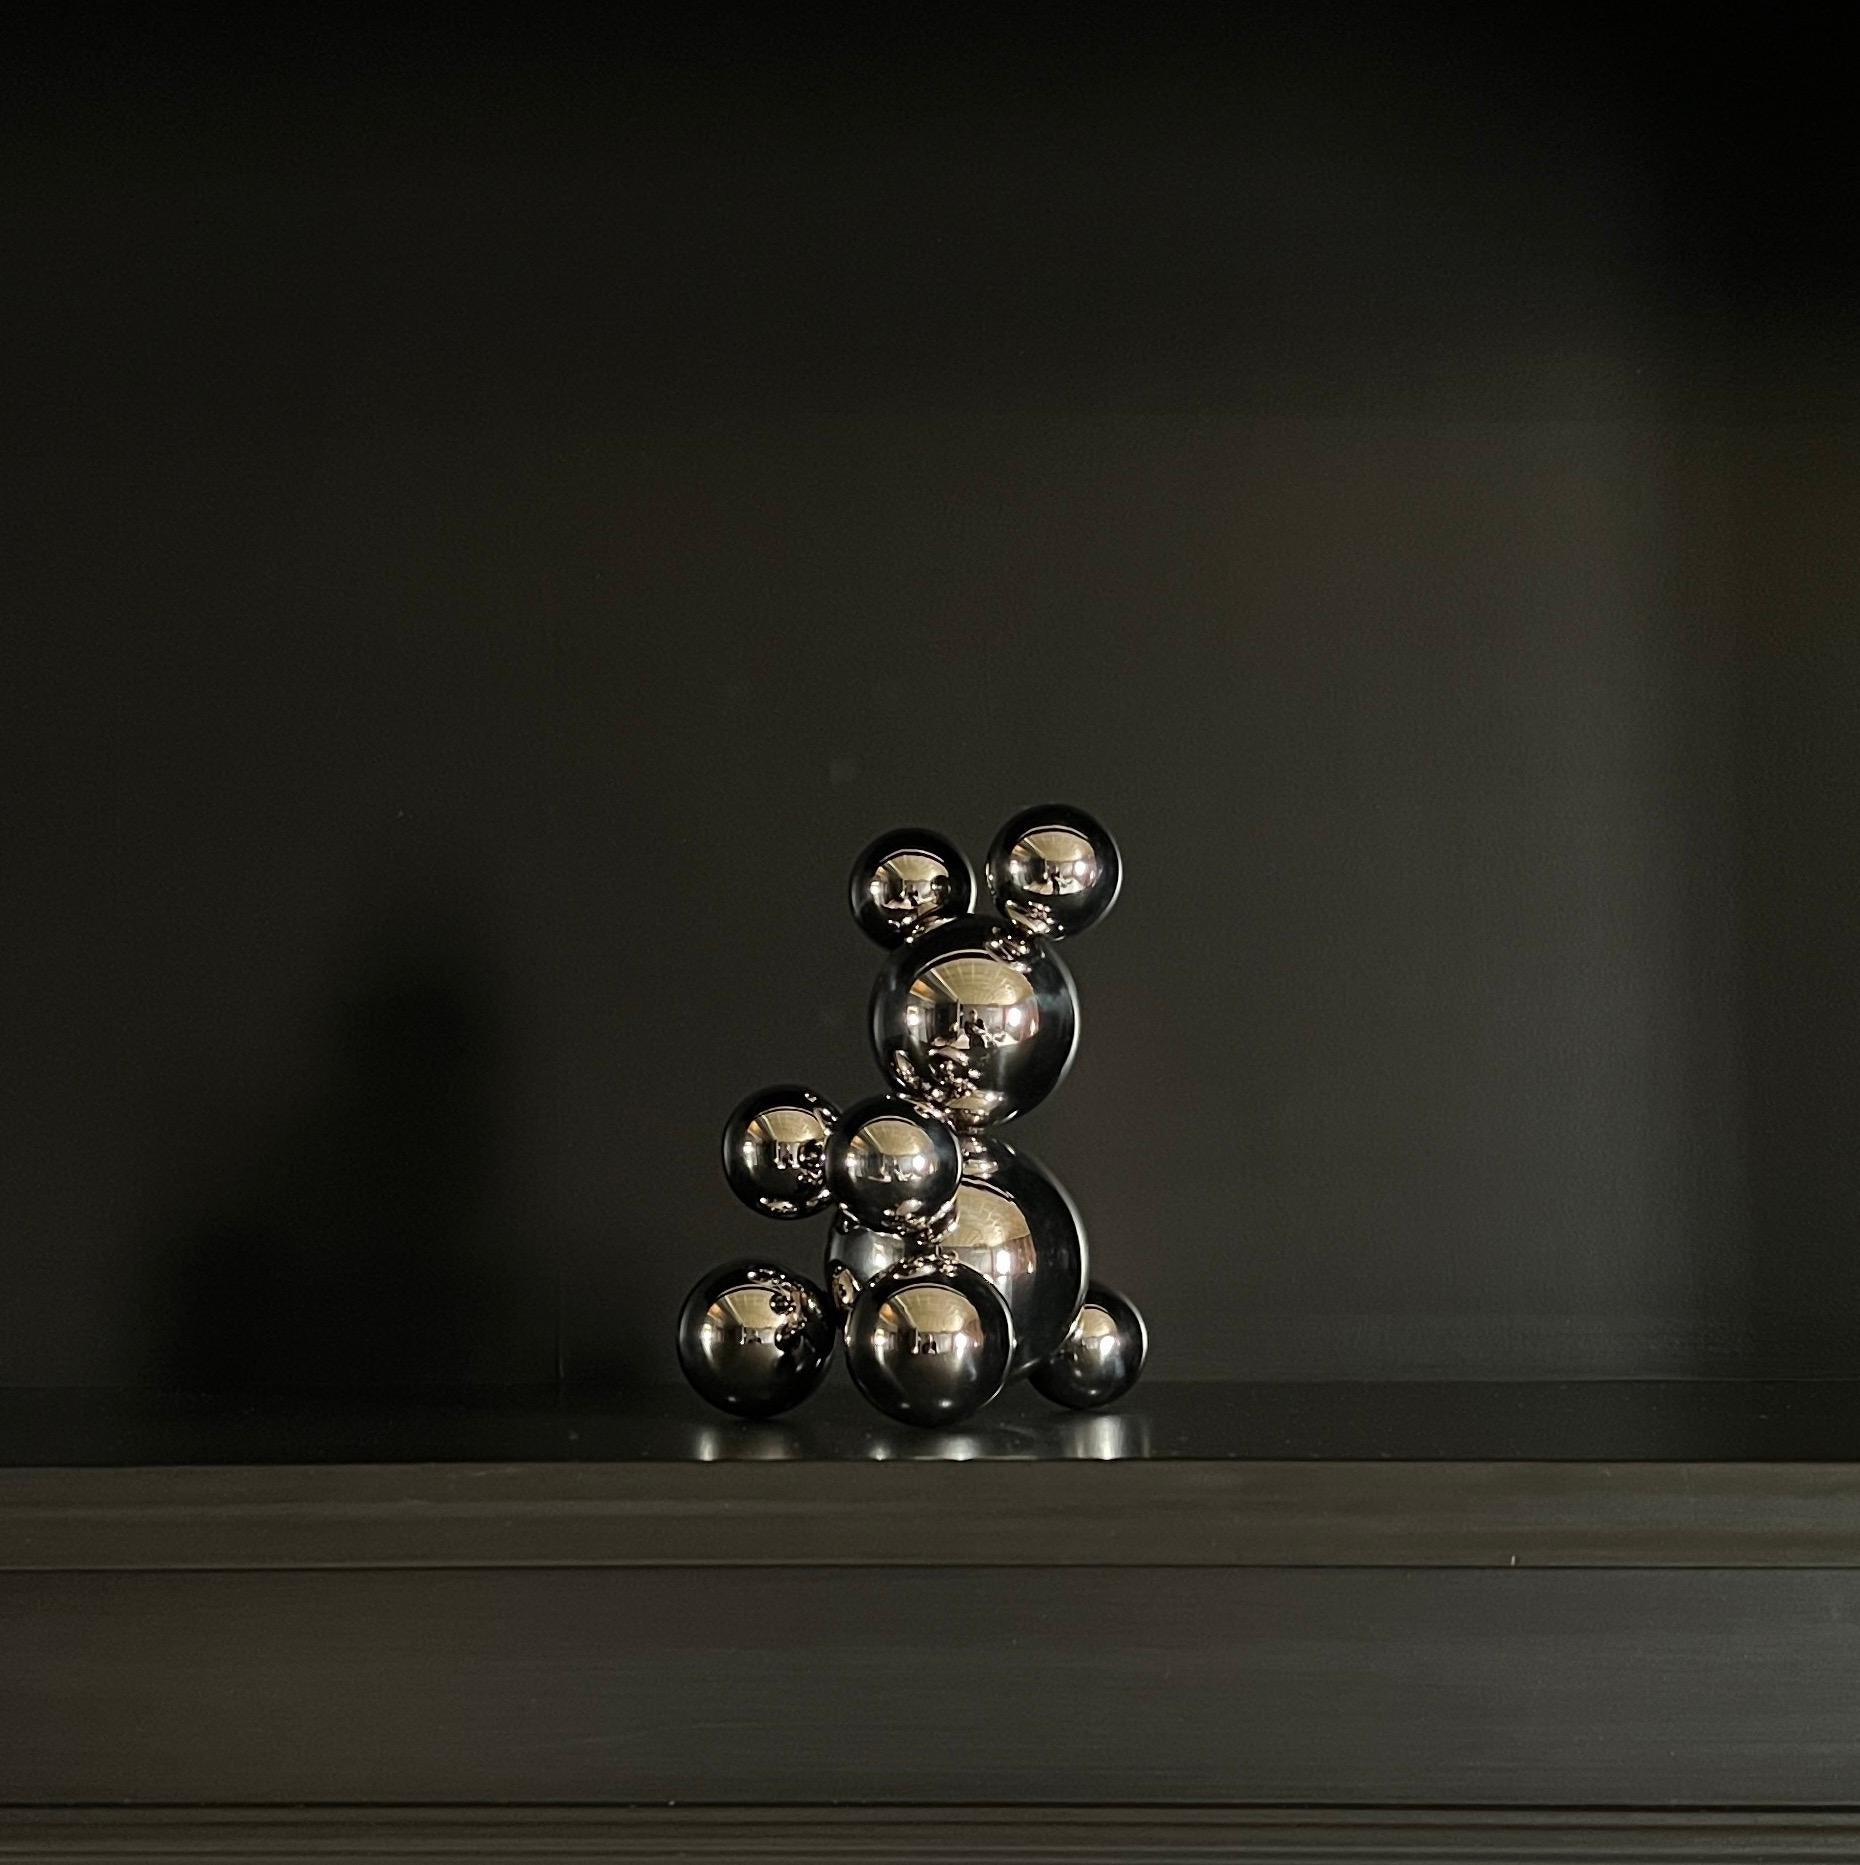 Tiny Stainless Steel Bear 'Tony' Sculpture Minimalistic Animal 6